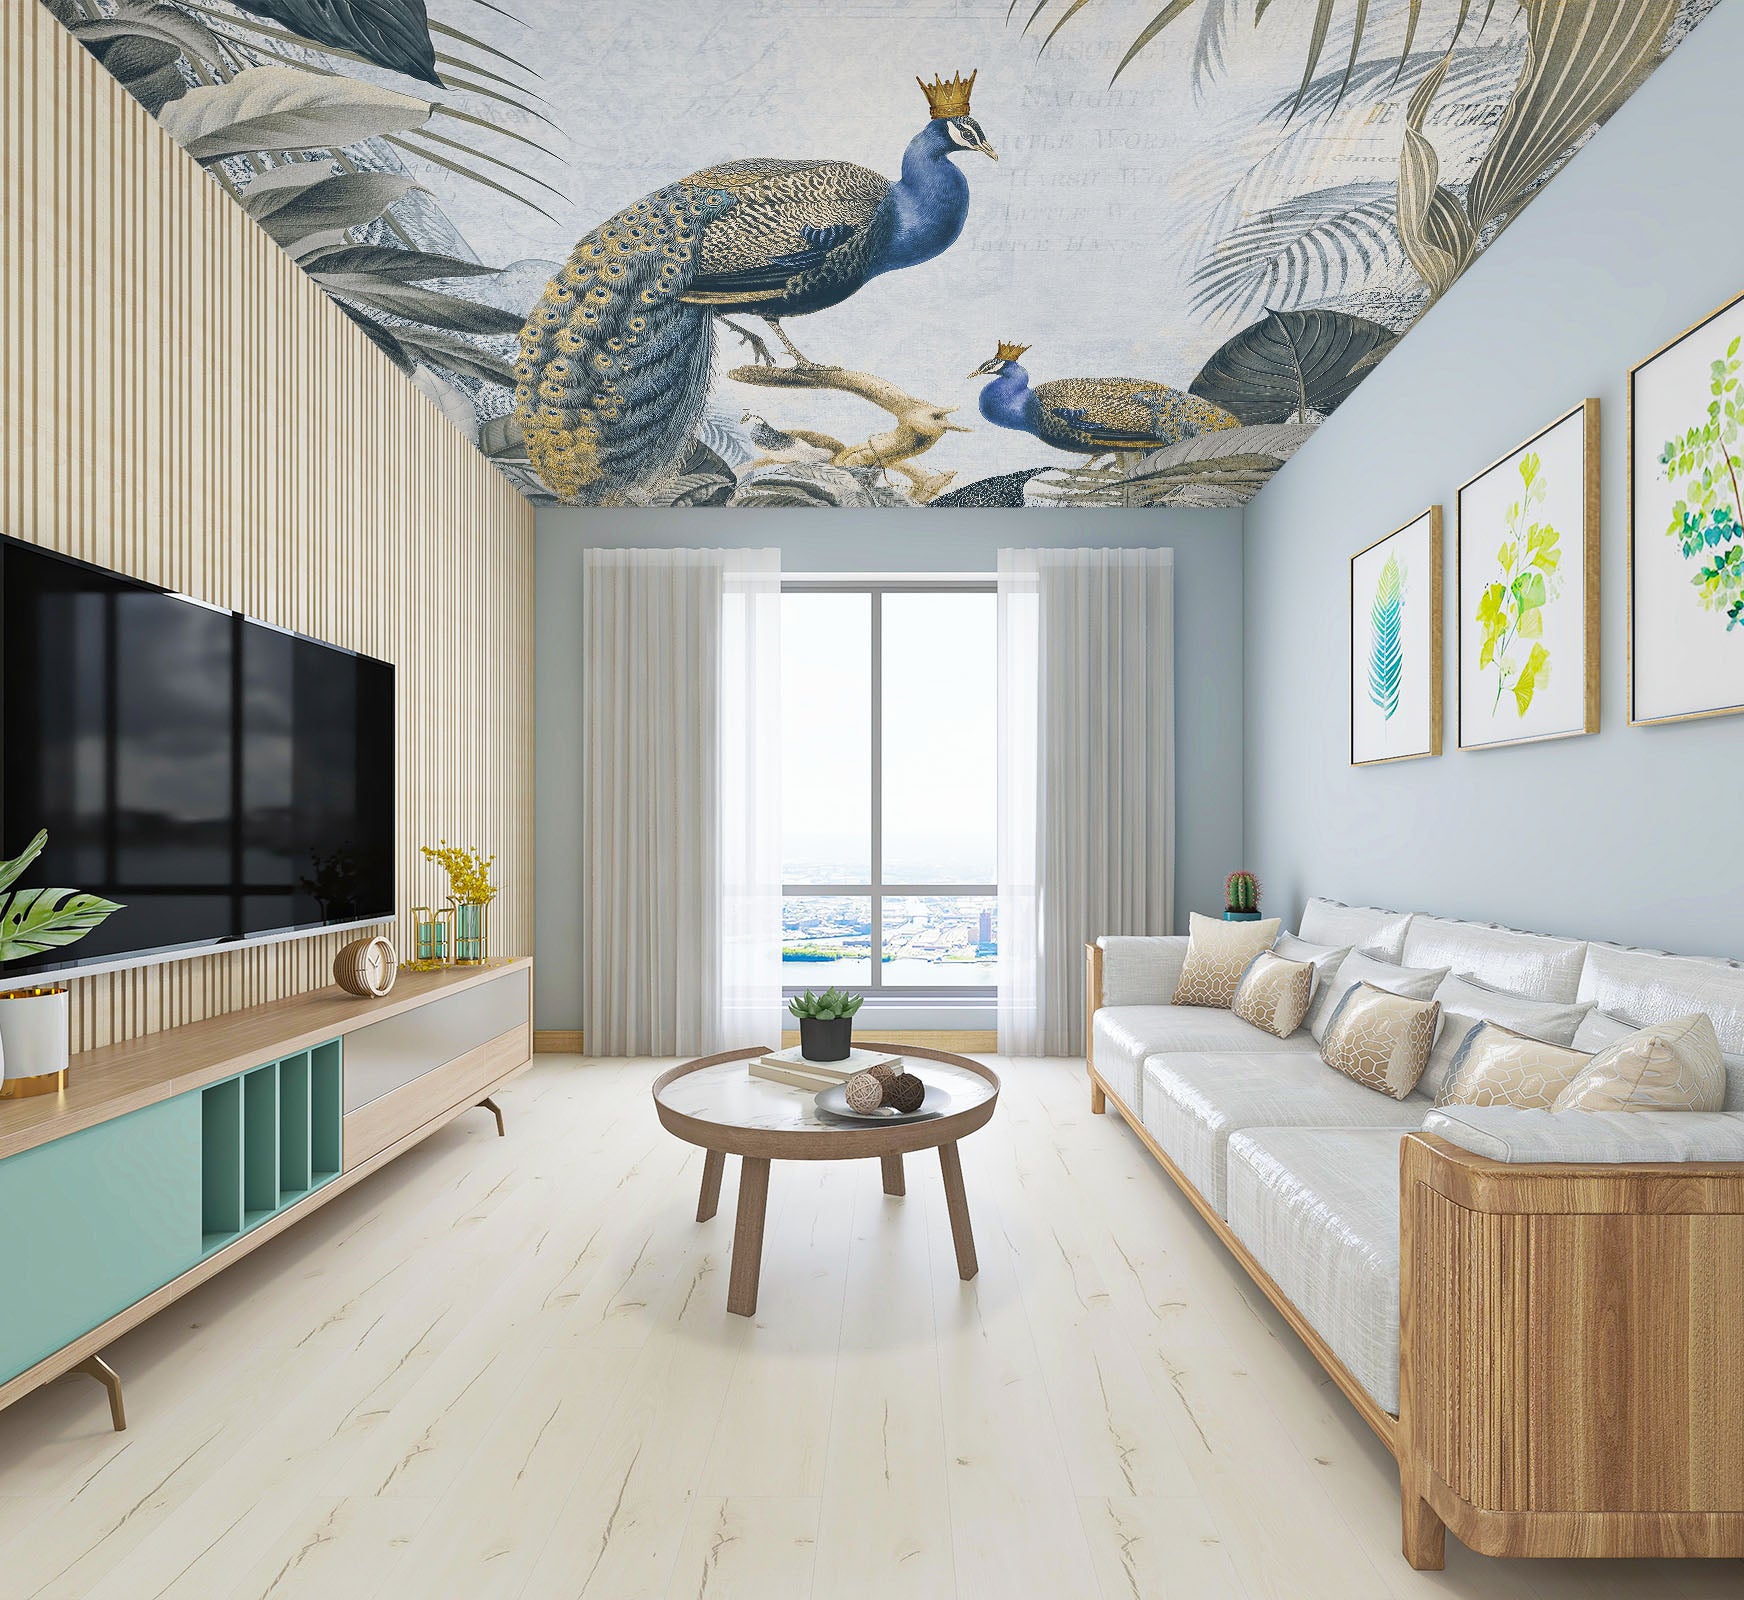 3D Peacock Leaves 973 Andrea Haase Ceiling Wallpaper Murals